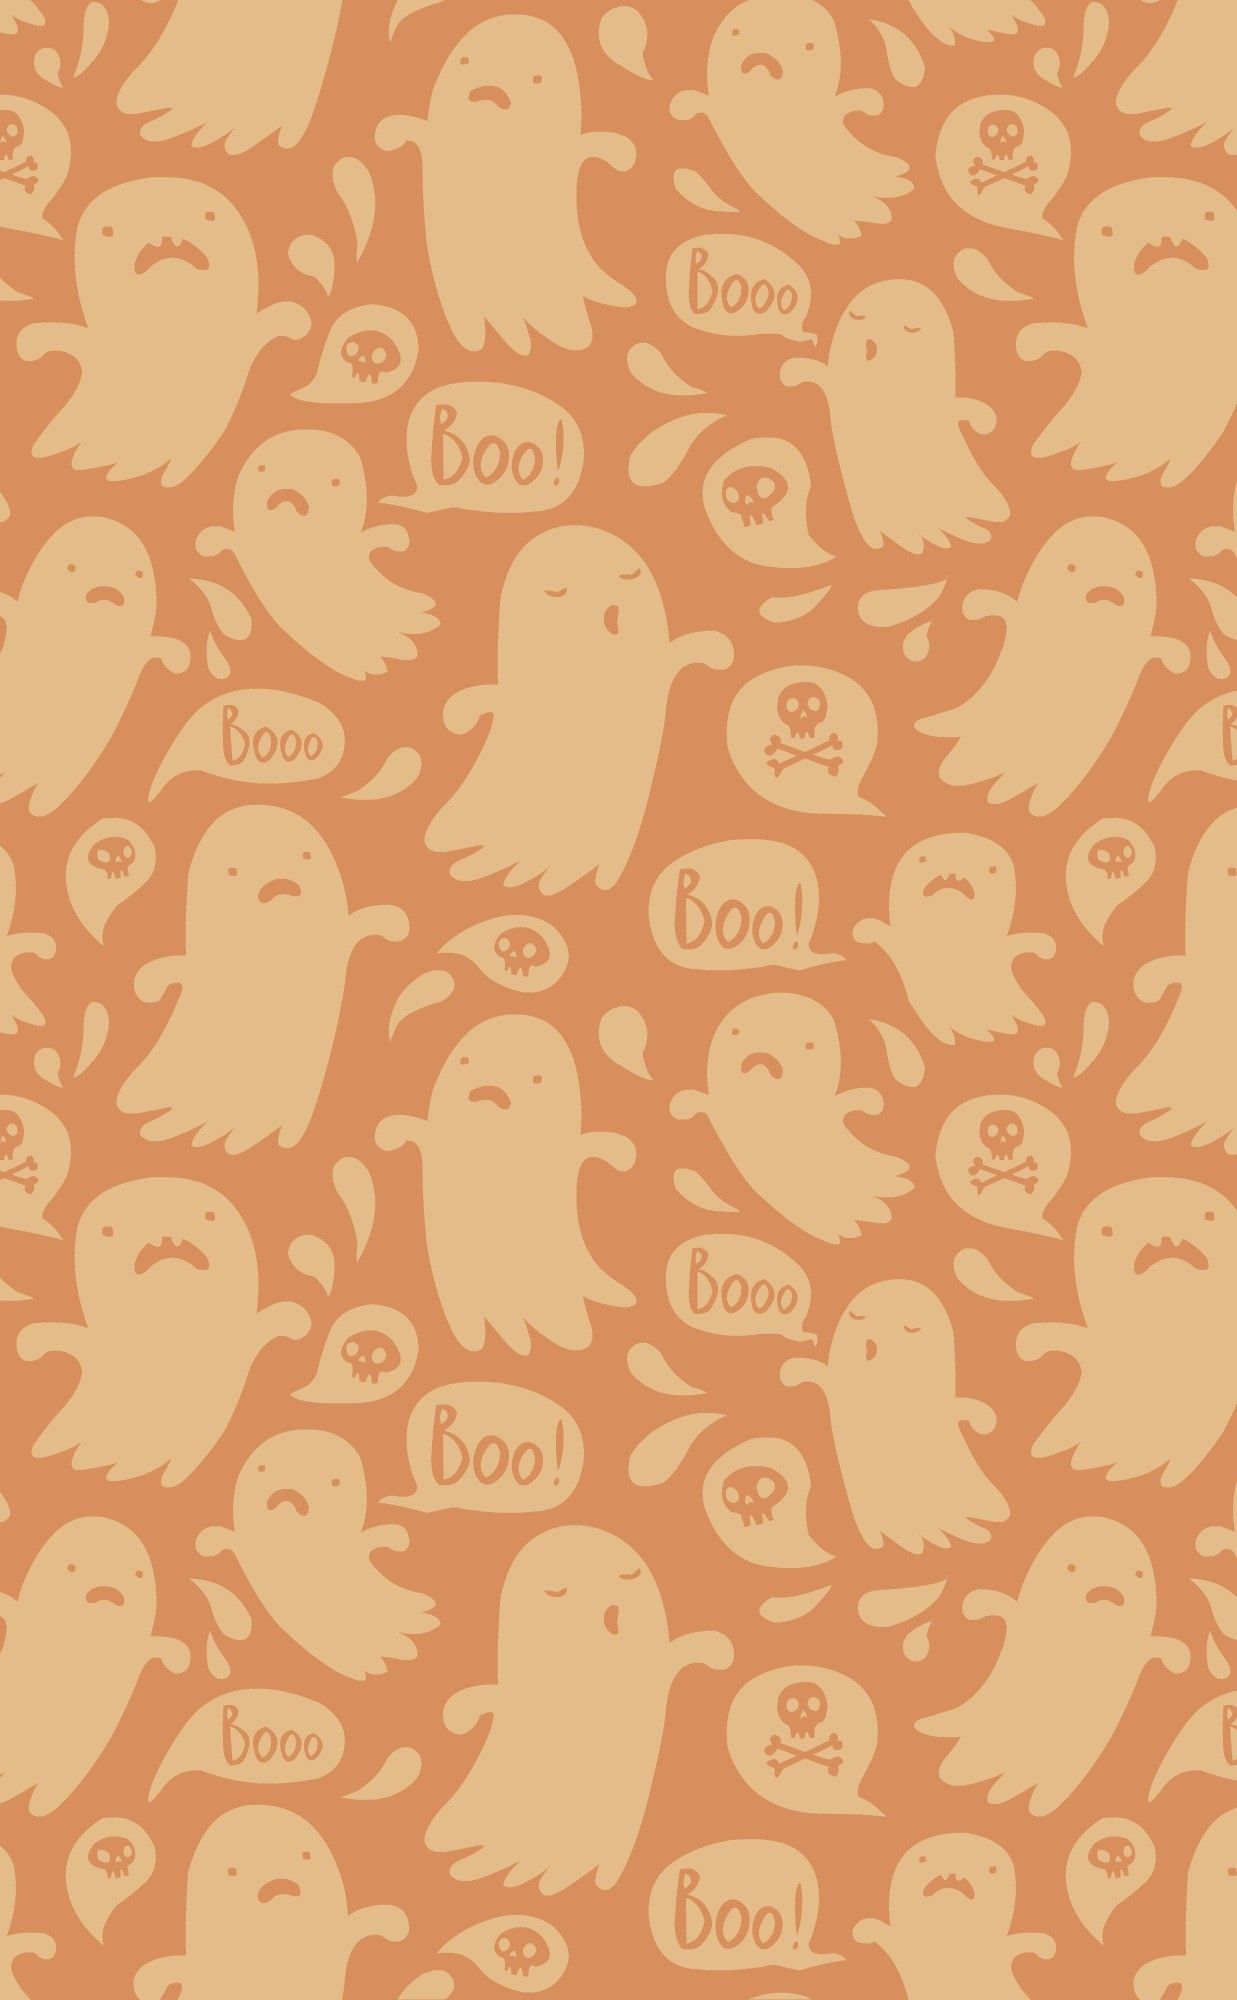 Kawaii Ghost Wallpapers